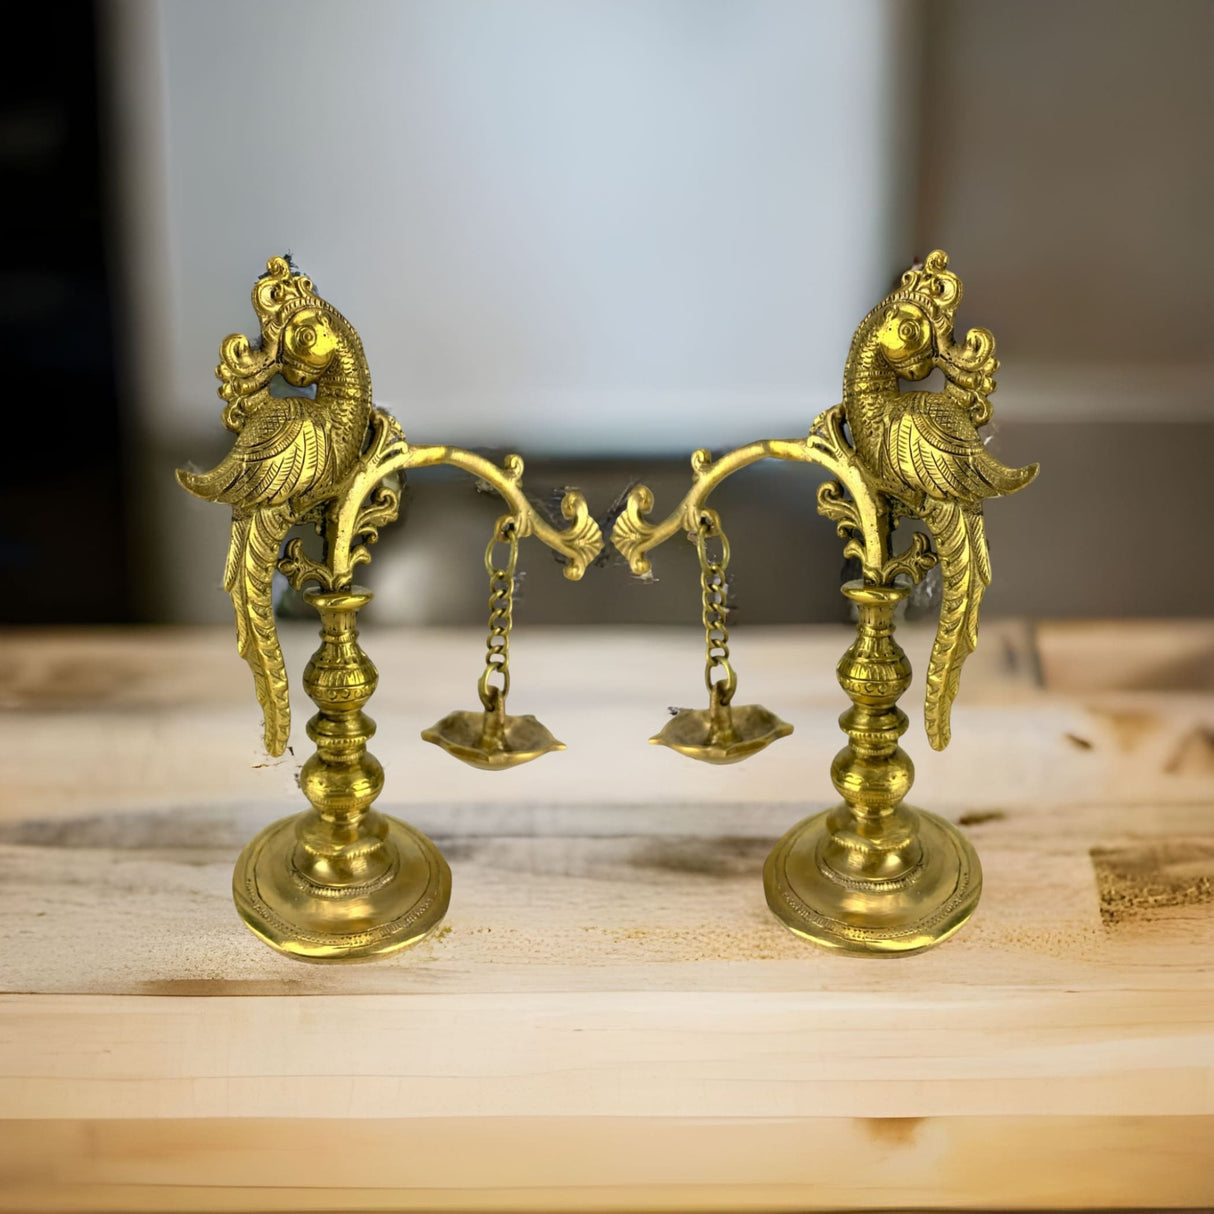 Brass annam lamp samai diya diwali decor oil altar temple